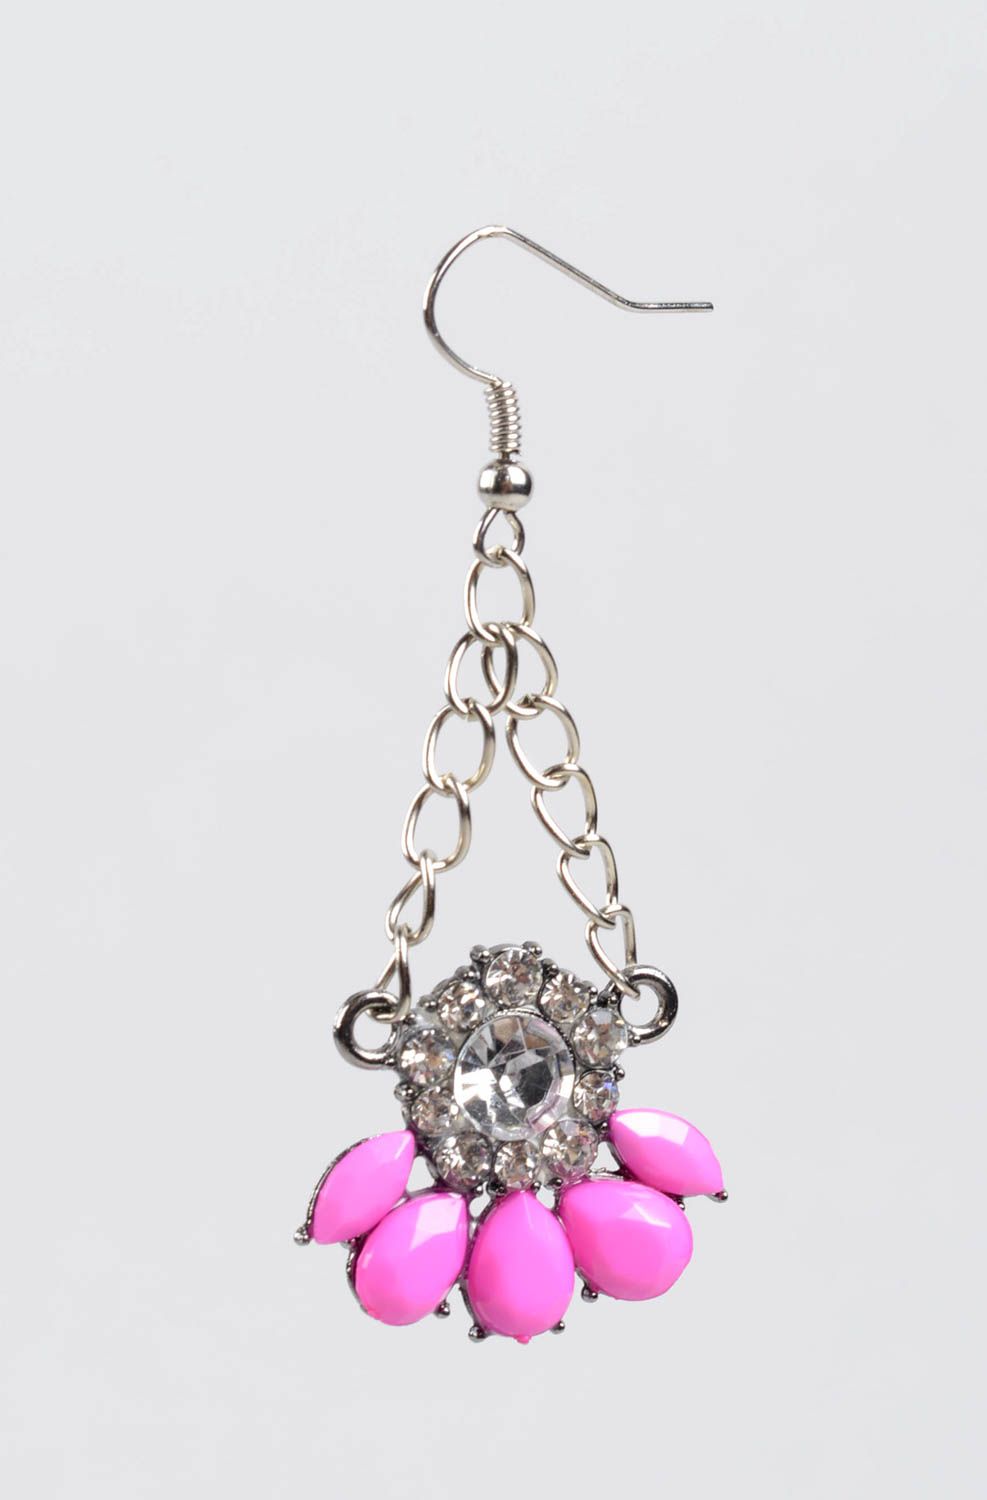 Dangling earrings handmade jewellery fashion earrings designer accessories photo 1